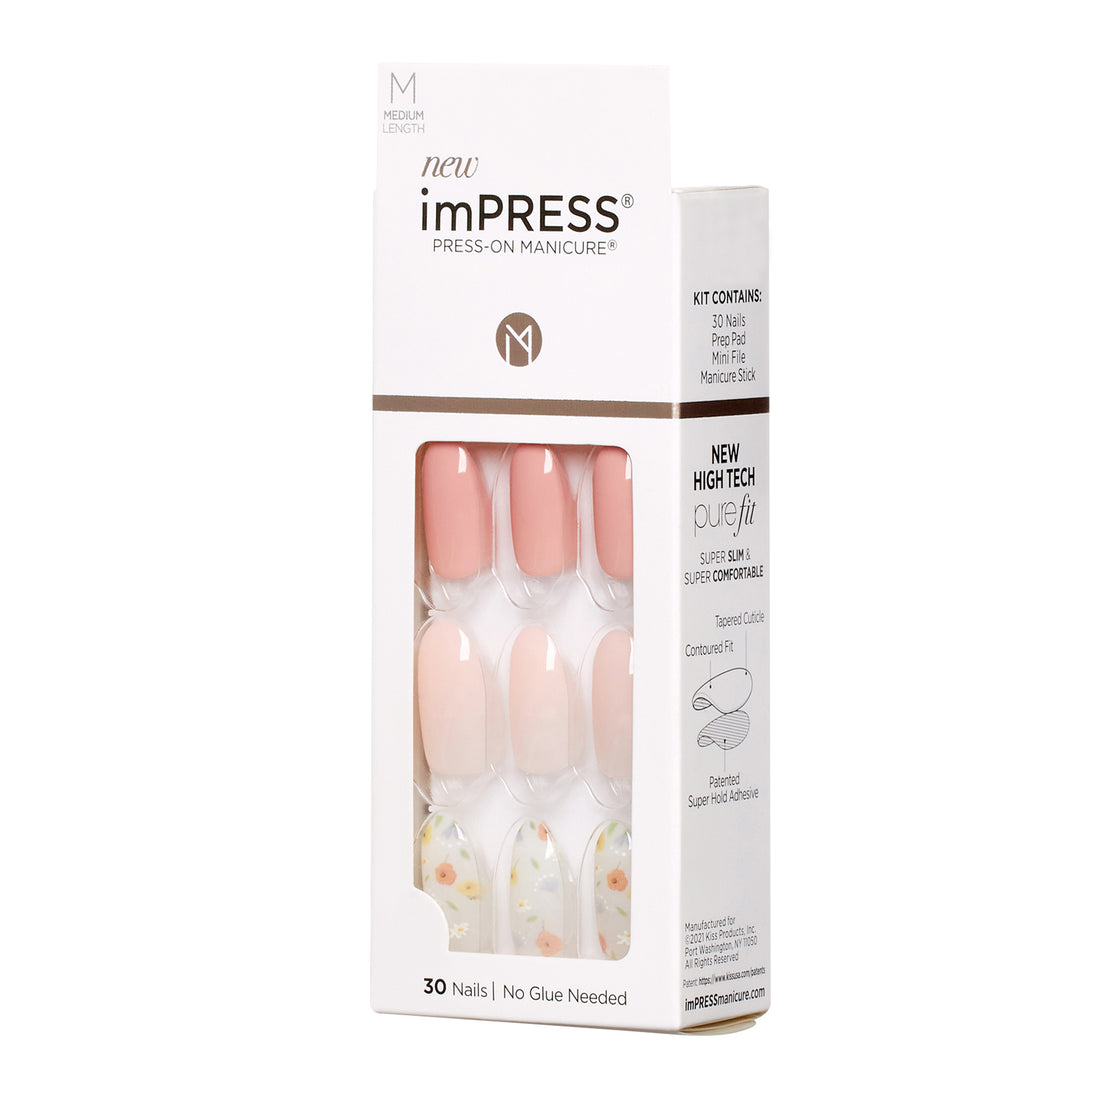 imPRESS Press-On Manicure - One Fine Day